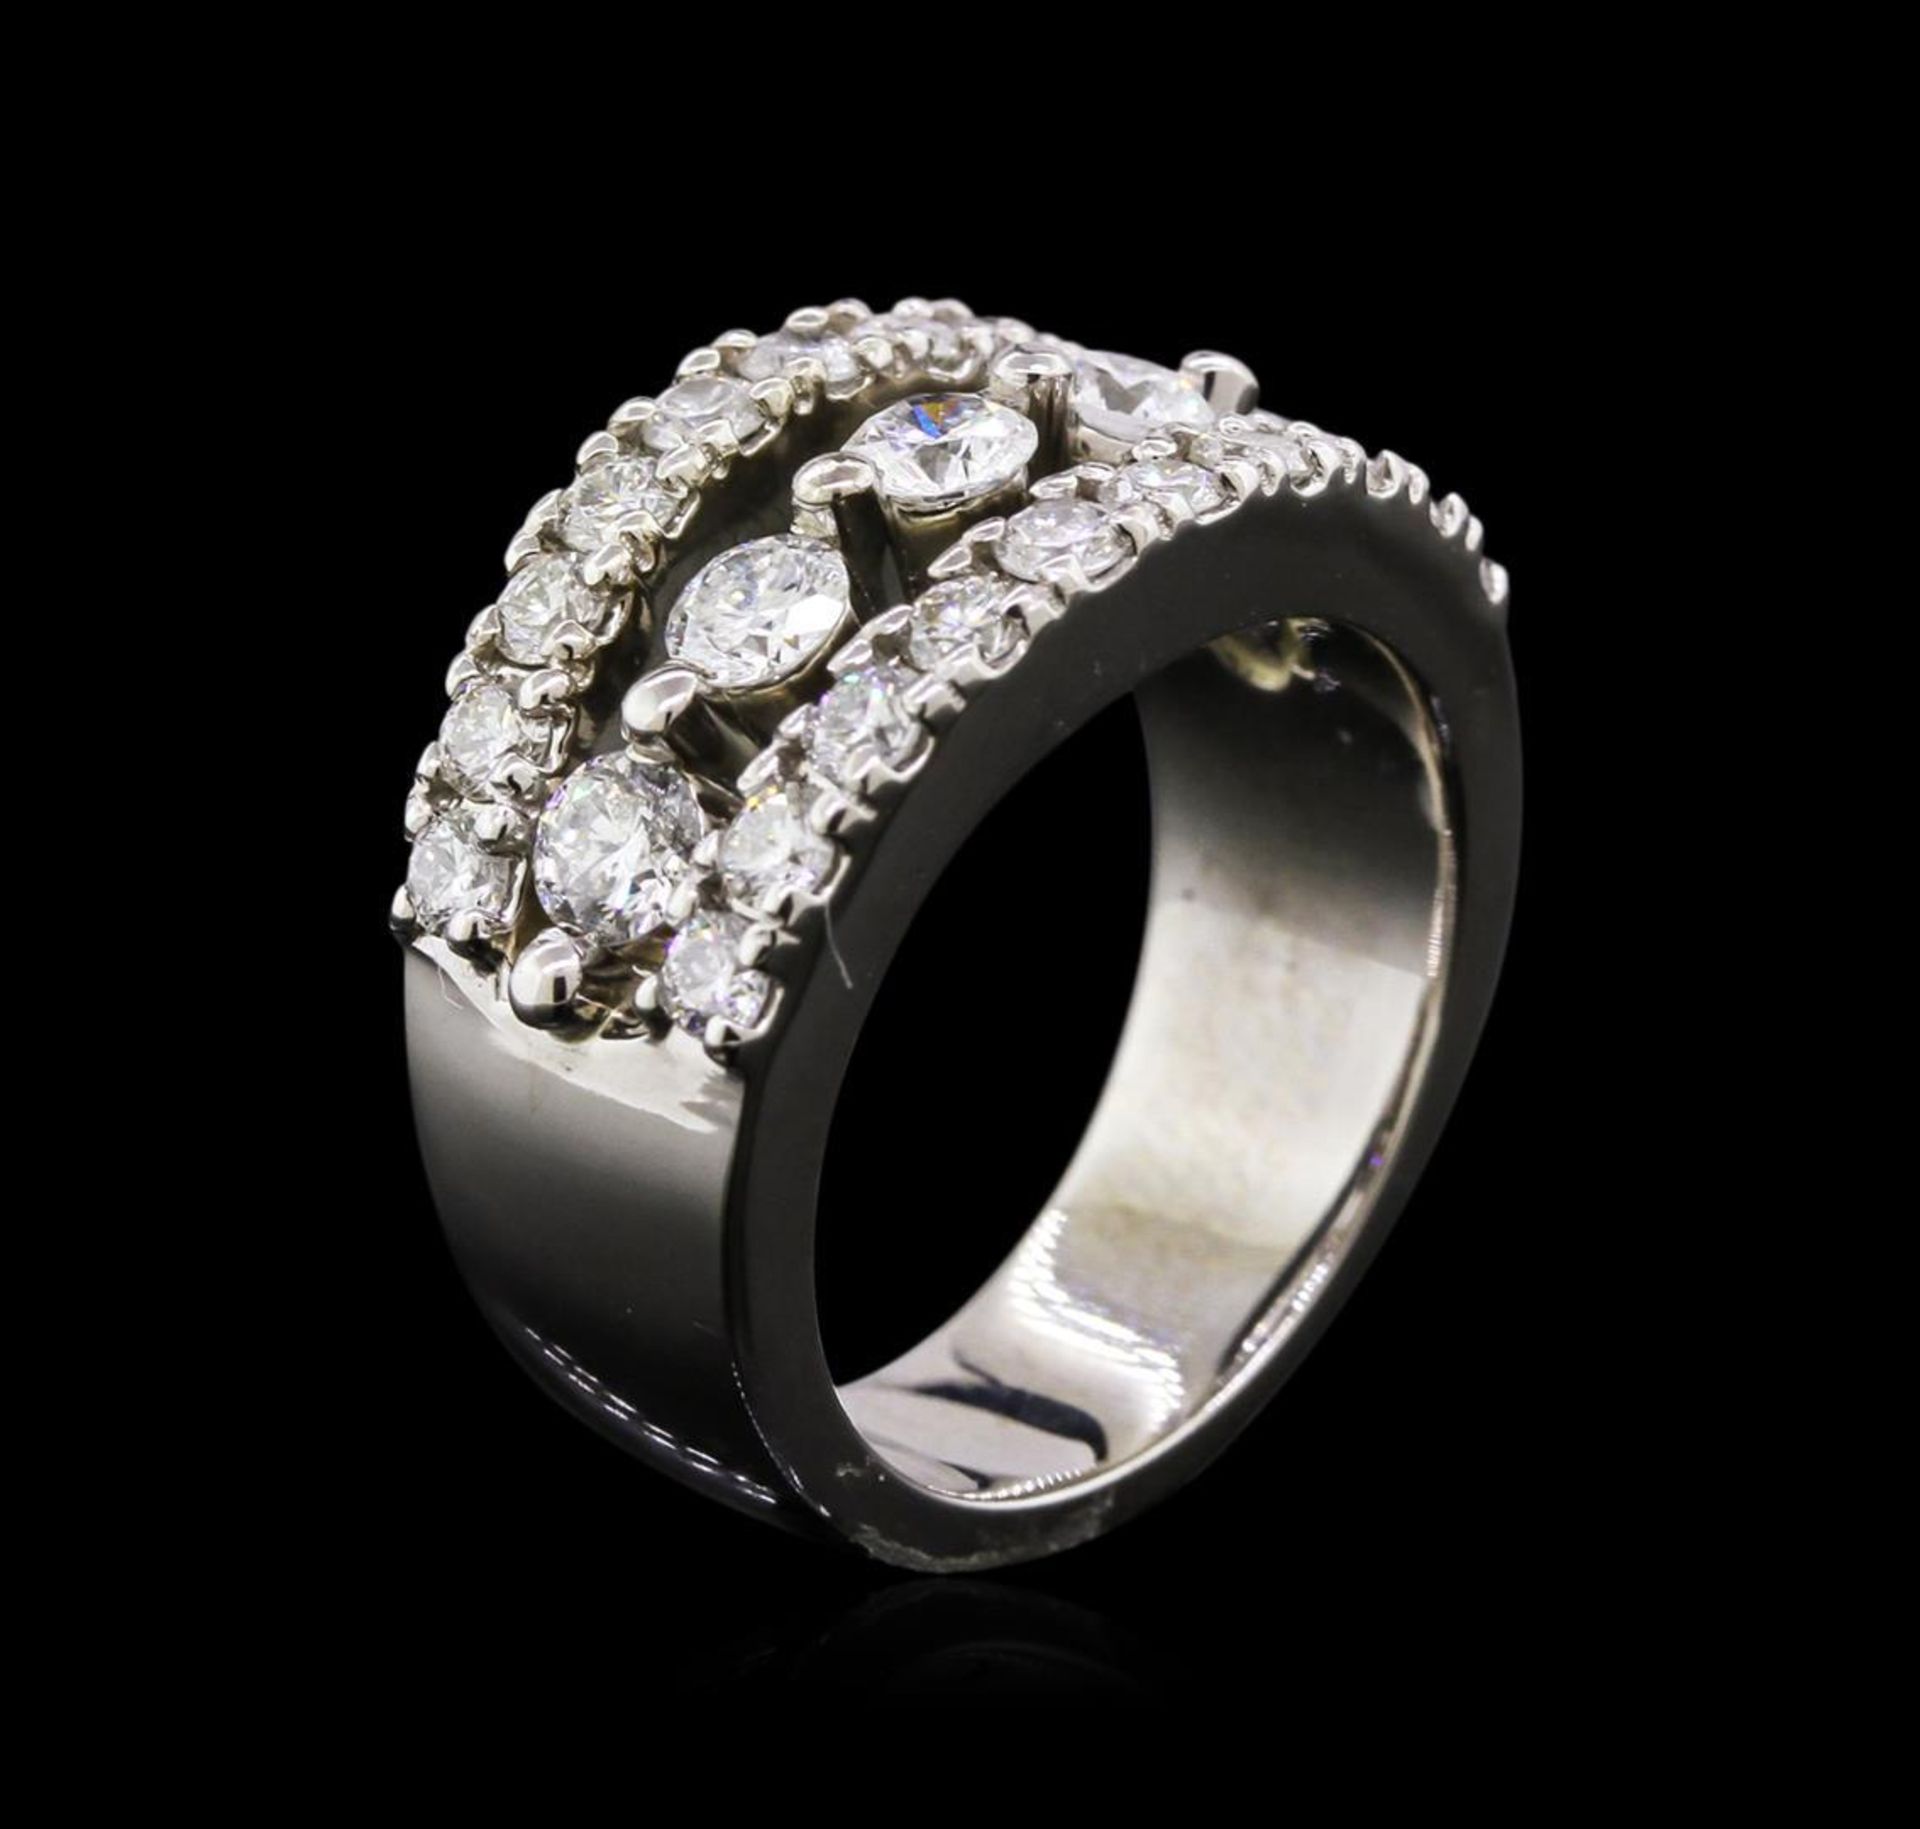 1.84 ctw Diamond Ring - 14KT White Gold - Image 3 of 4